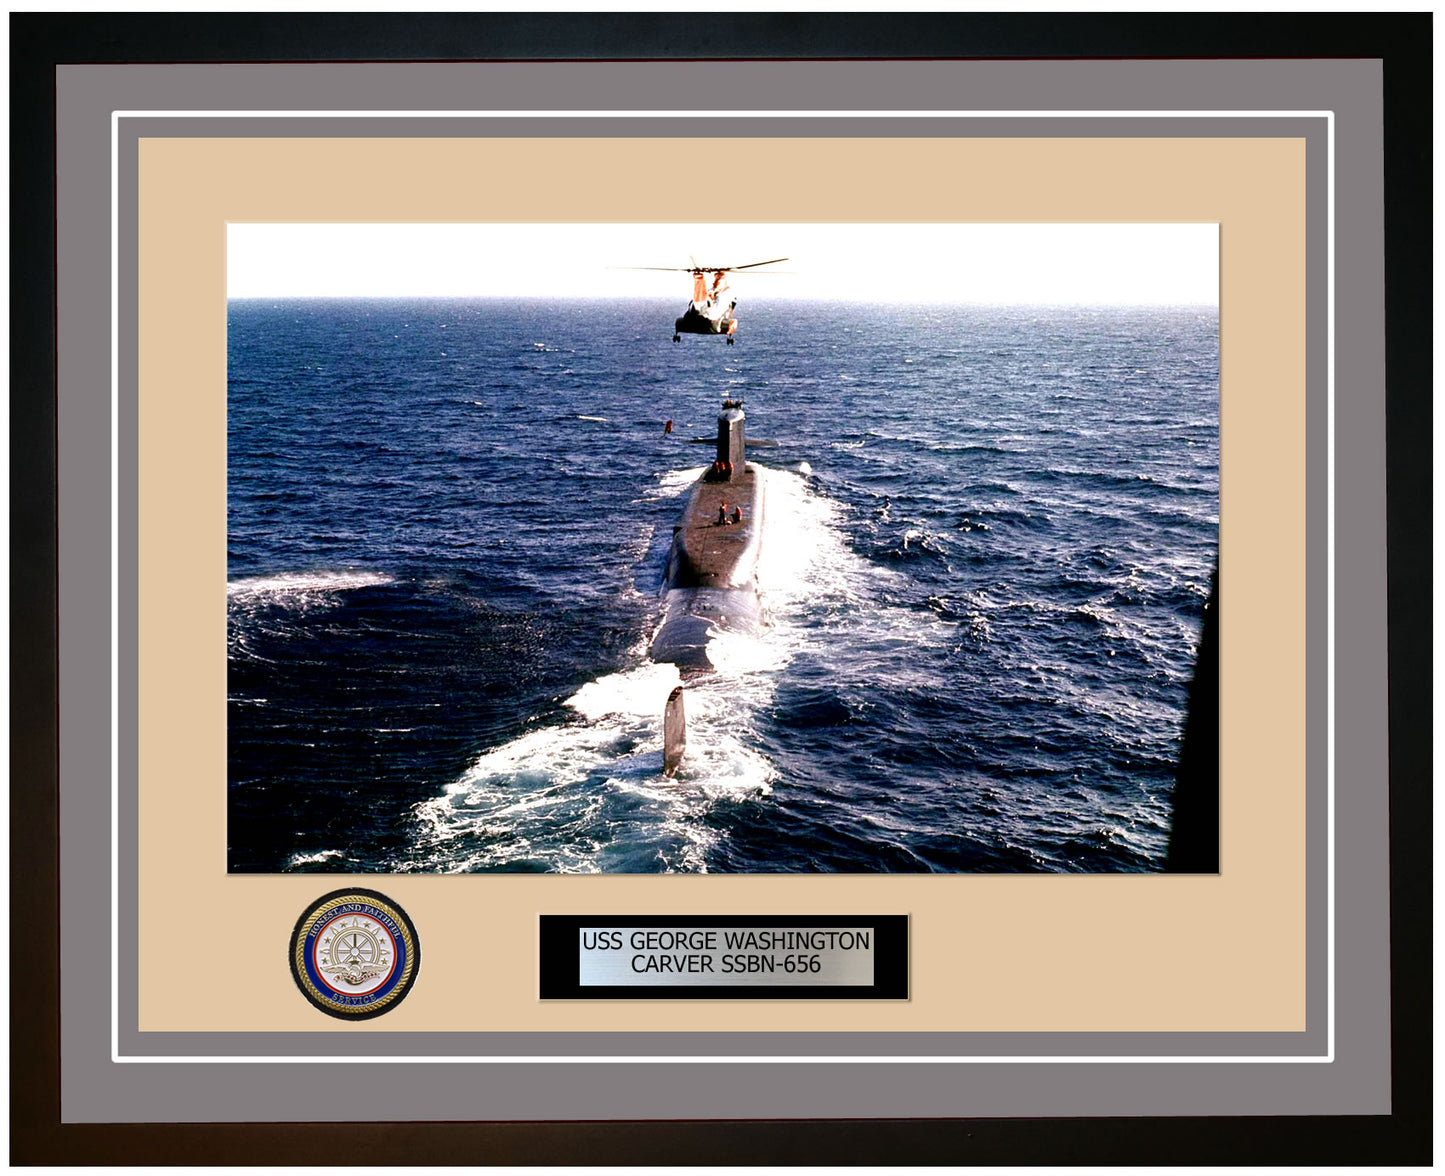 USS George Washington Carver SSBN-656 Framed Navy Ship Photo Grey